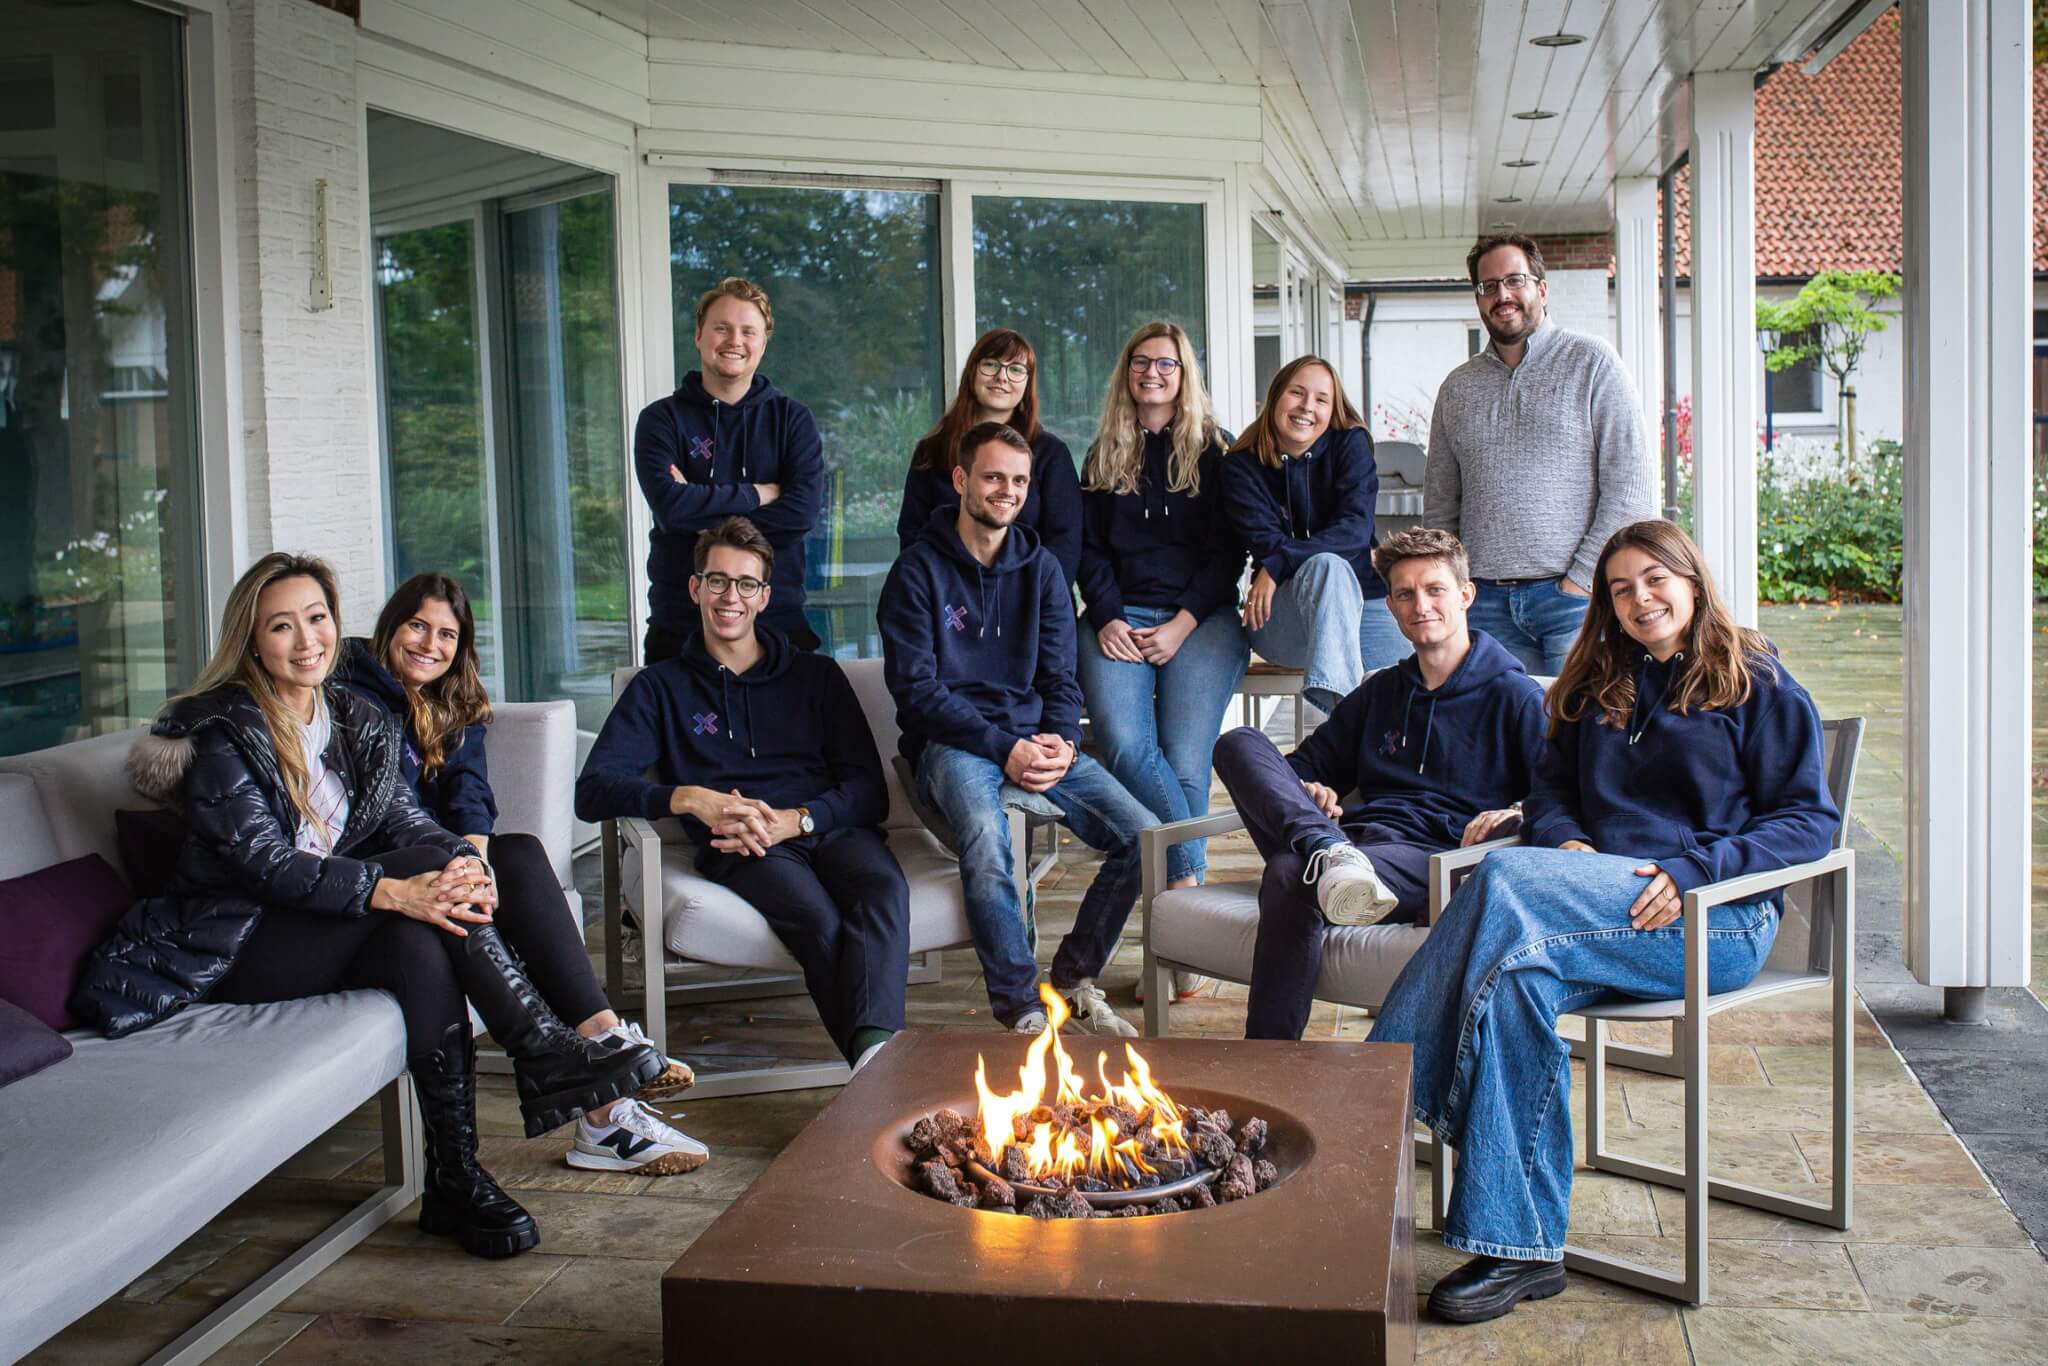 the STRAREX marketing agency team sitting around a campfire